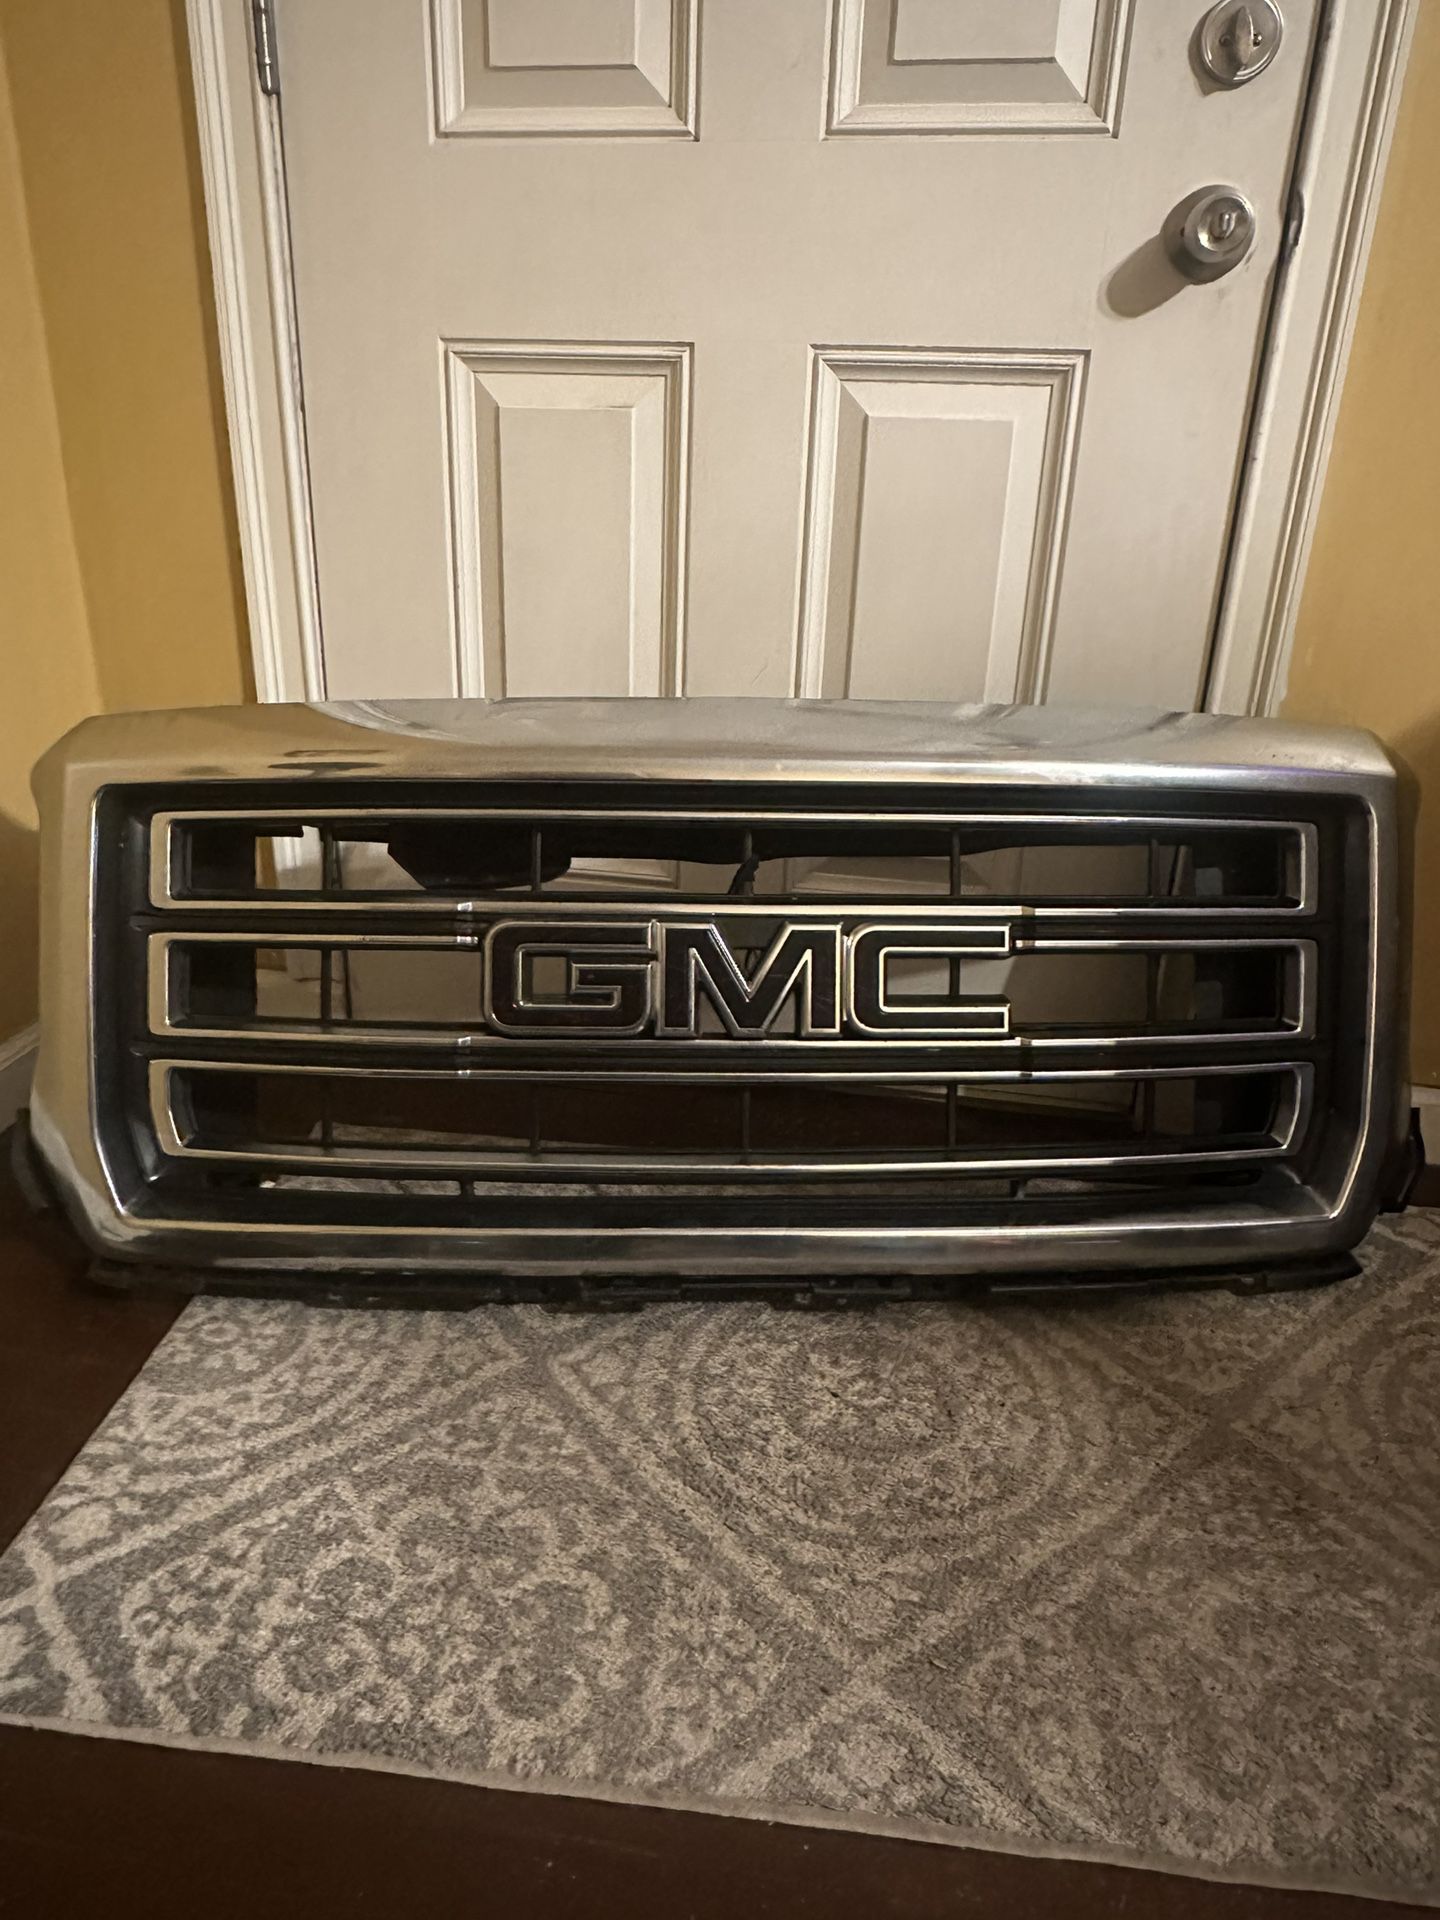 2014-2015 Gmc Sierra 1500 Front Chrome Grill 